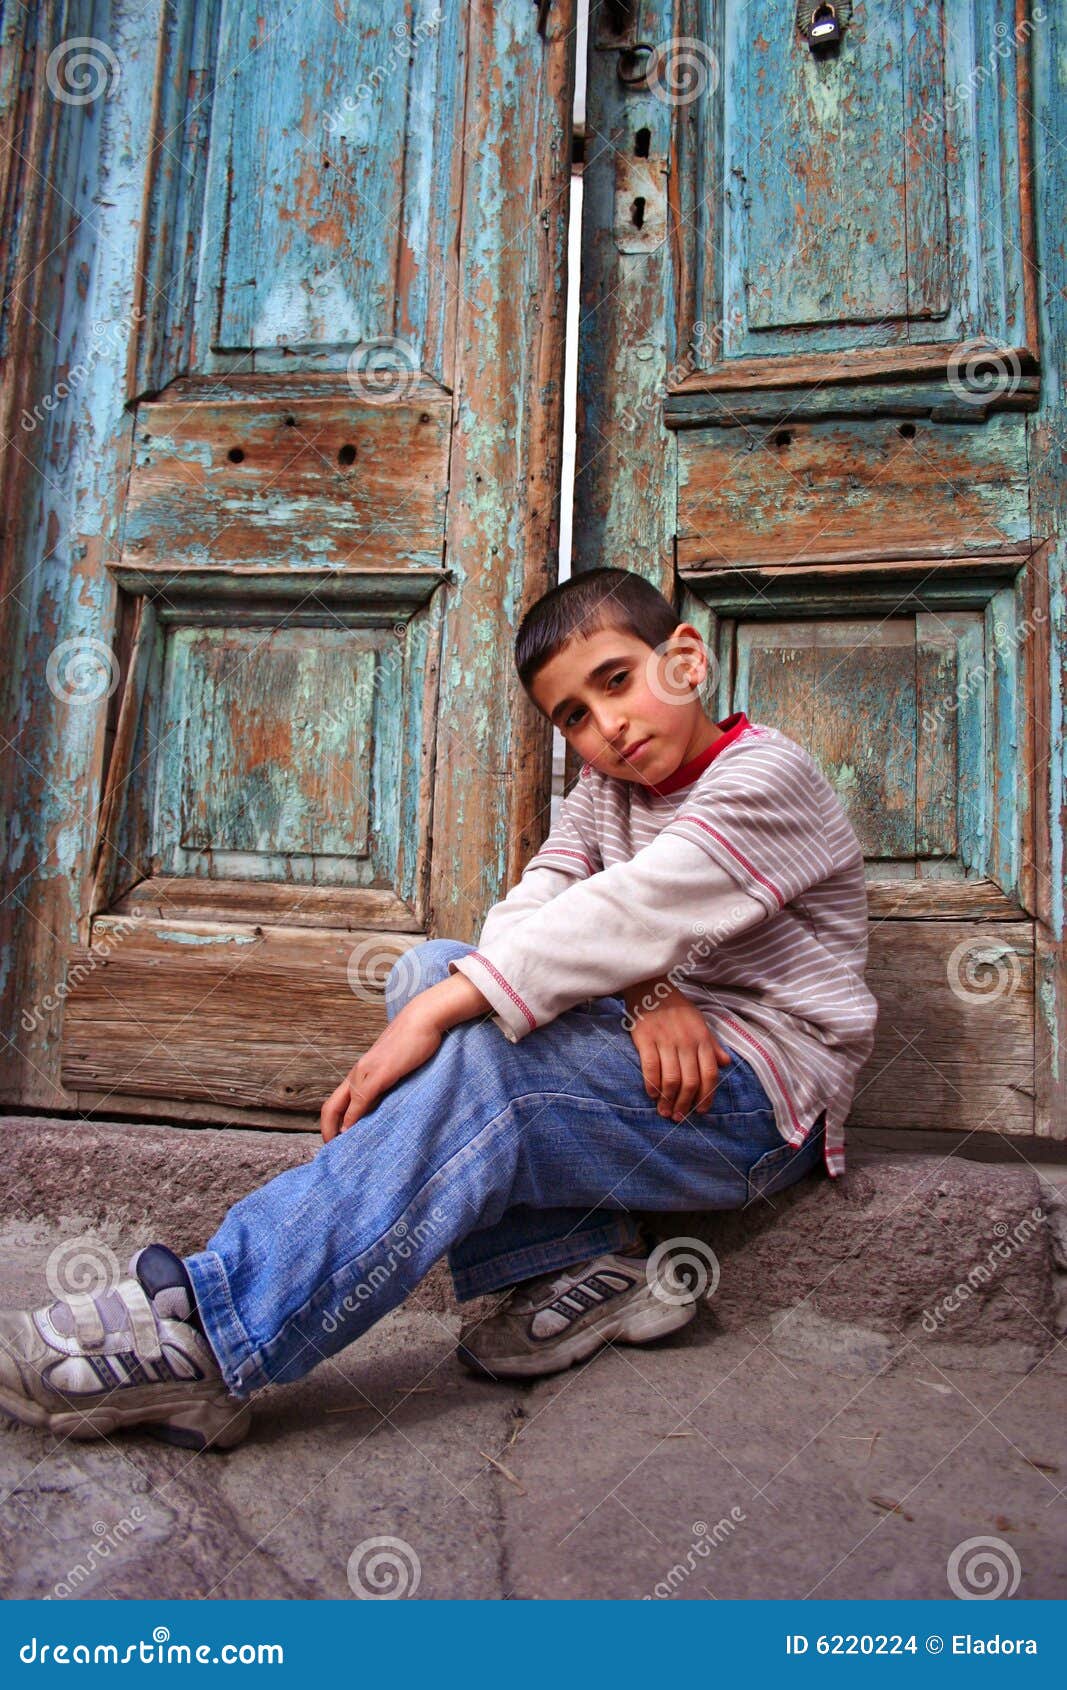 boy-sitting-doorstep-6220224.jpg